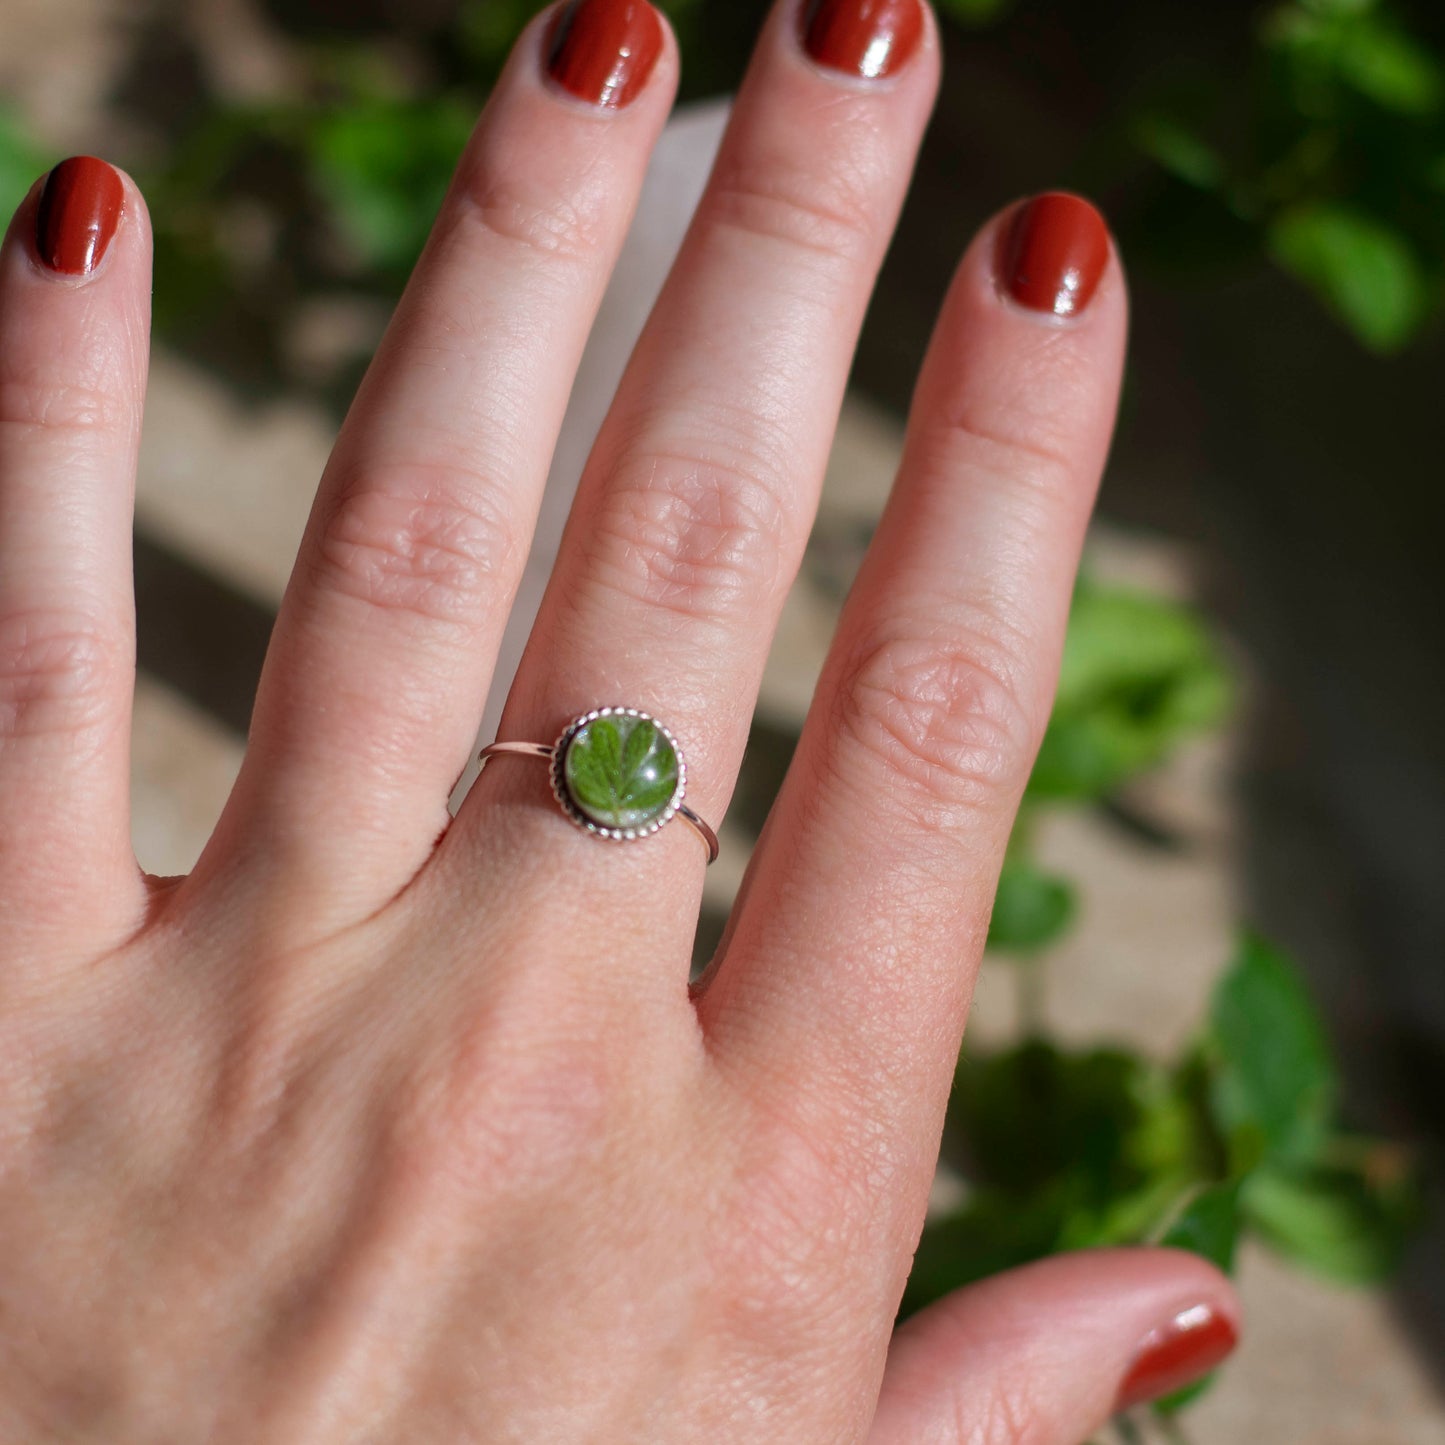 Dasiphora Leaf Ring - Size 7